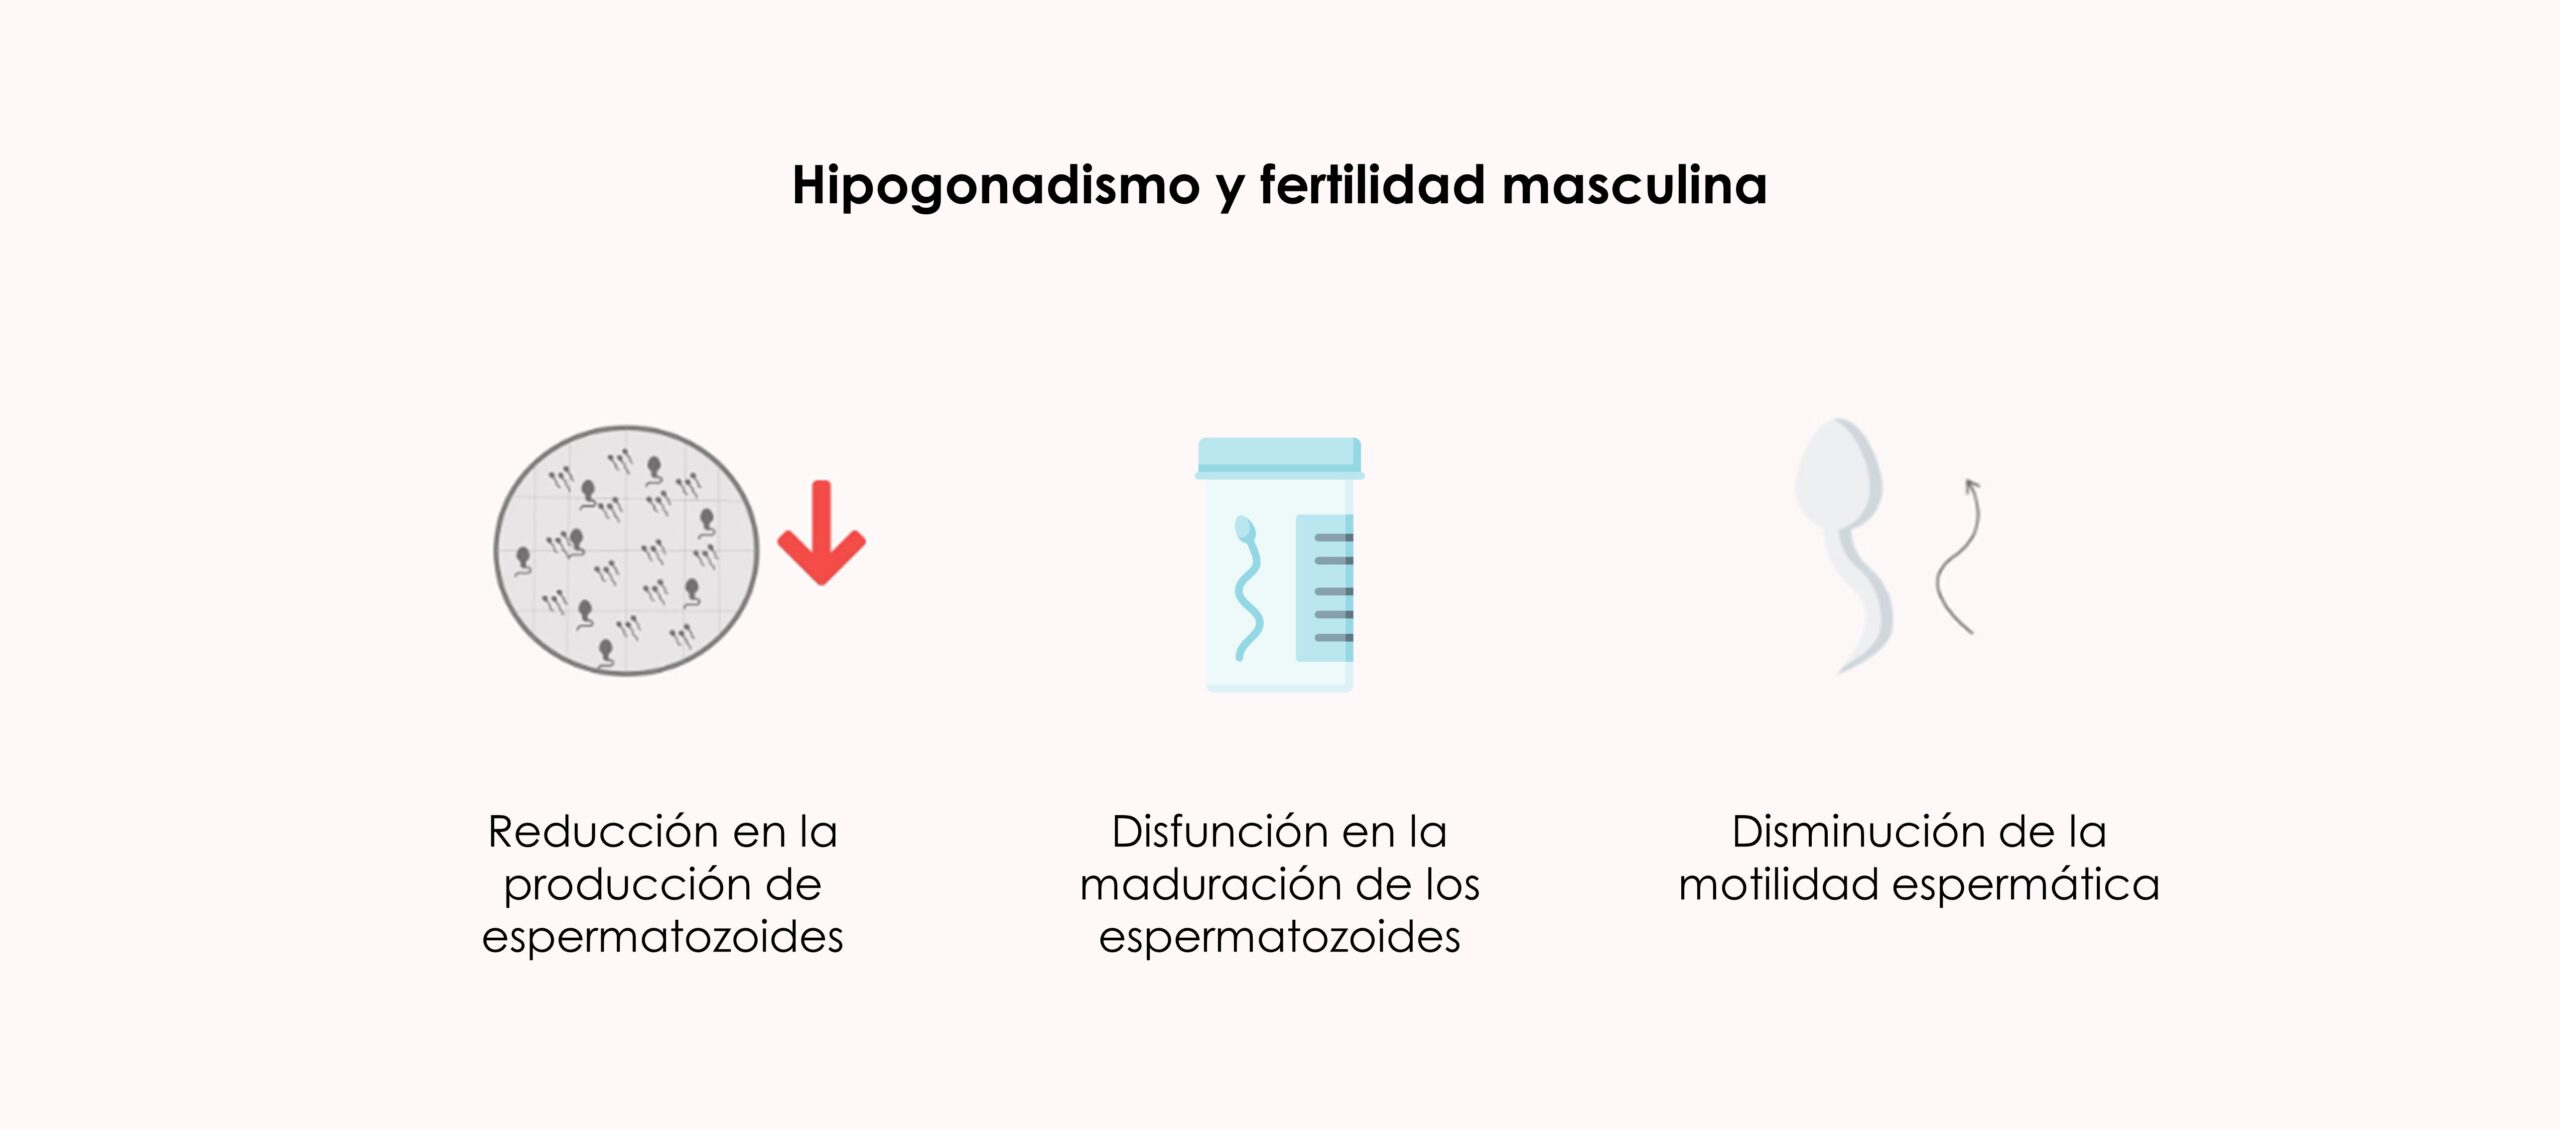 Hipogonadismo y fertilidad masculina